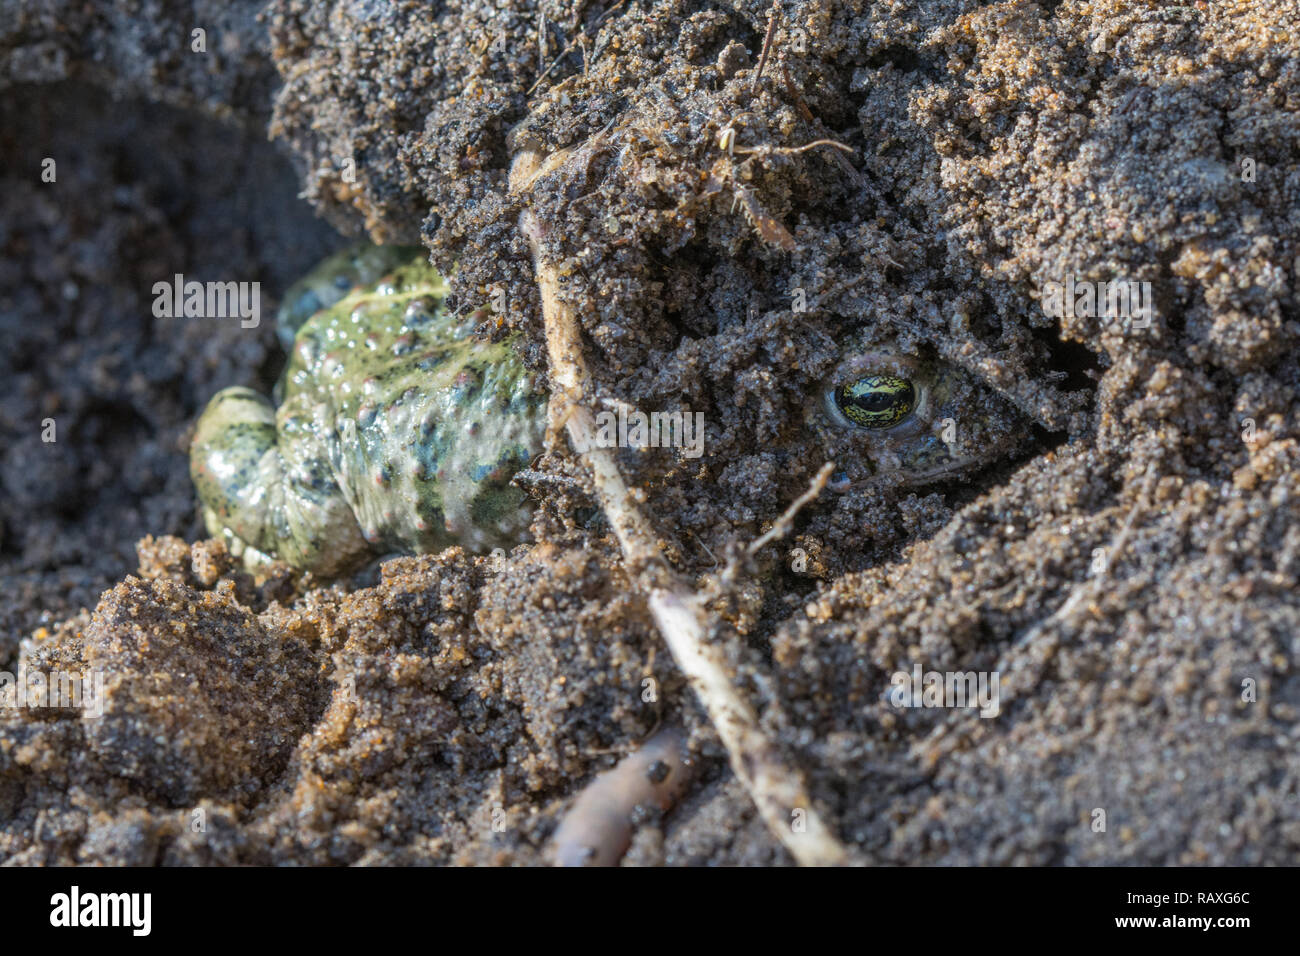 Natterjack toad (Epidalea calamita) burrowing into sand on heathland in Hampshire, UK Stock Photo